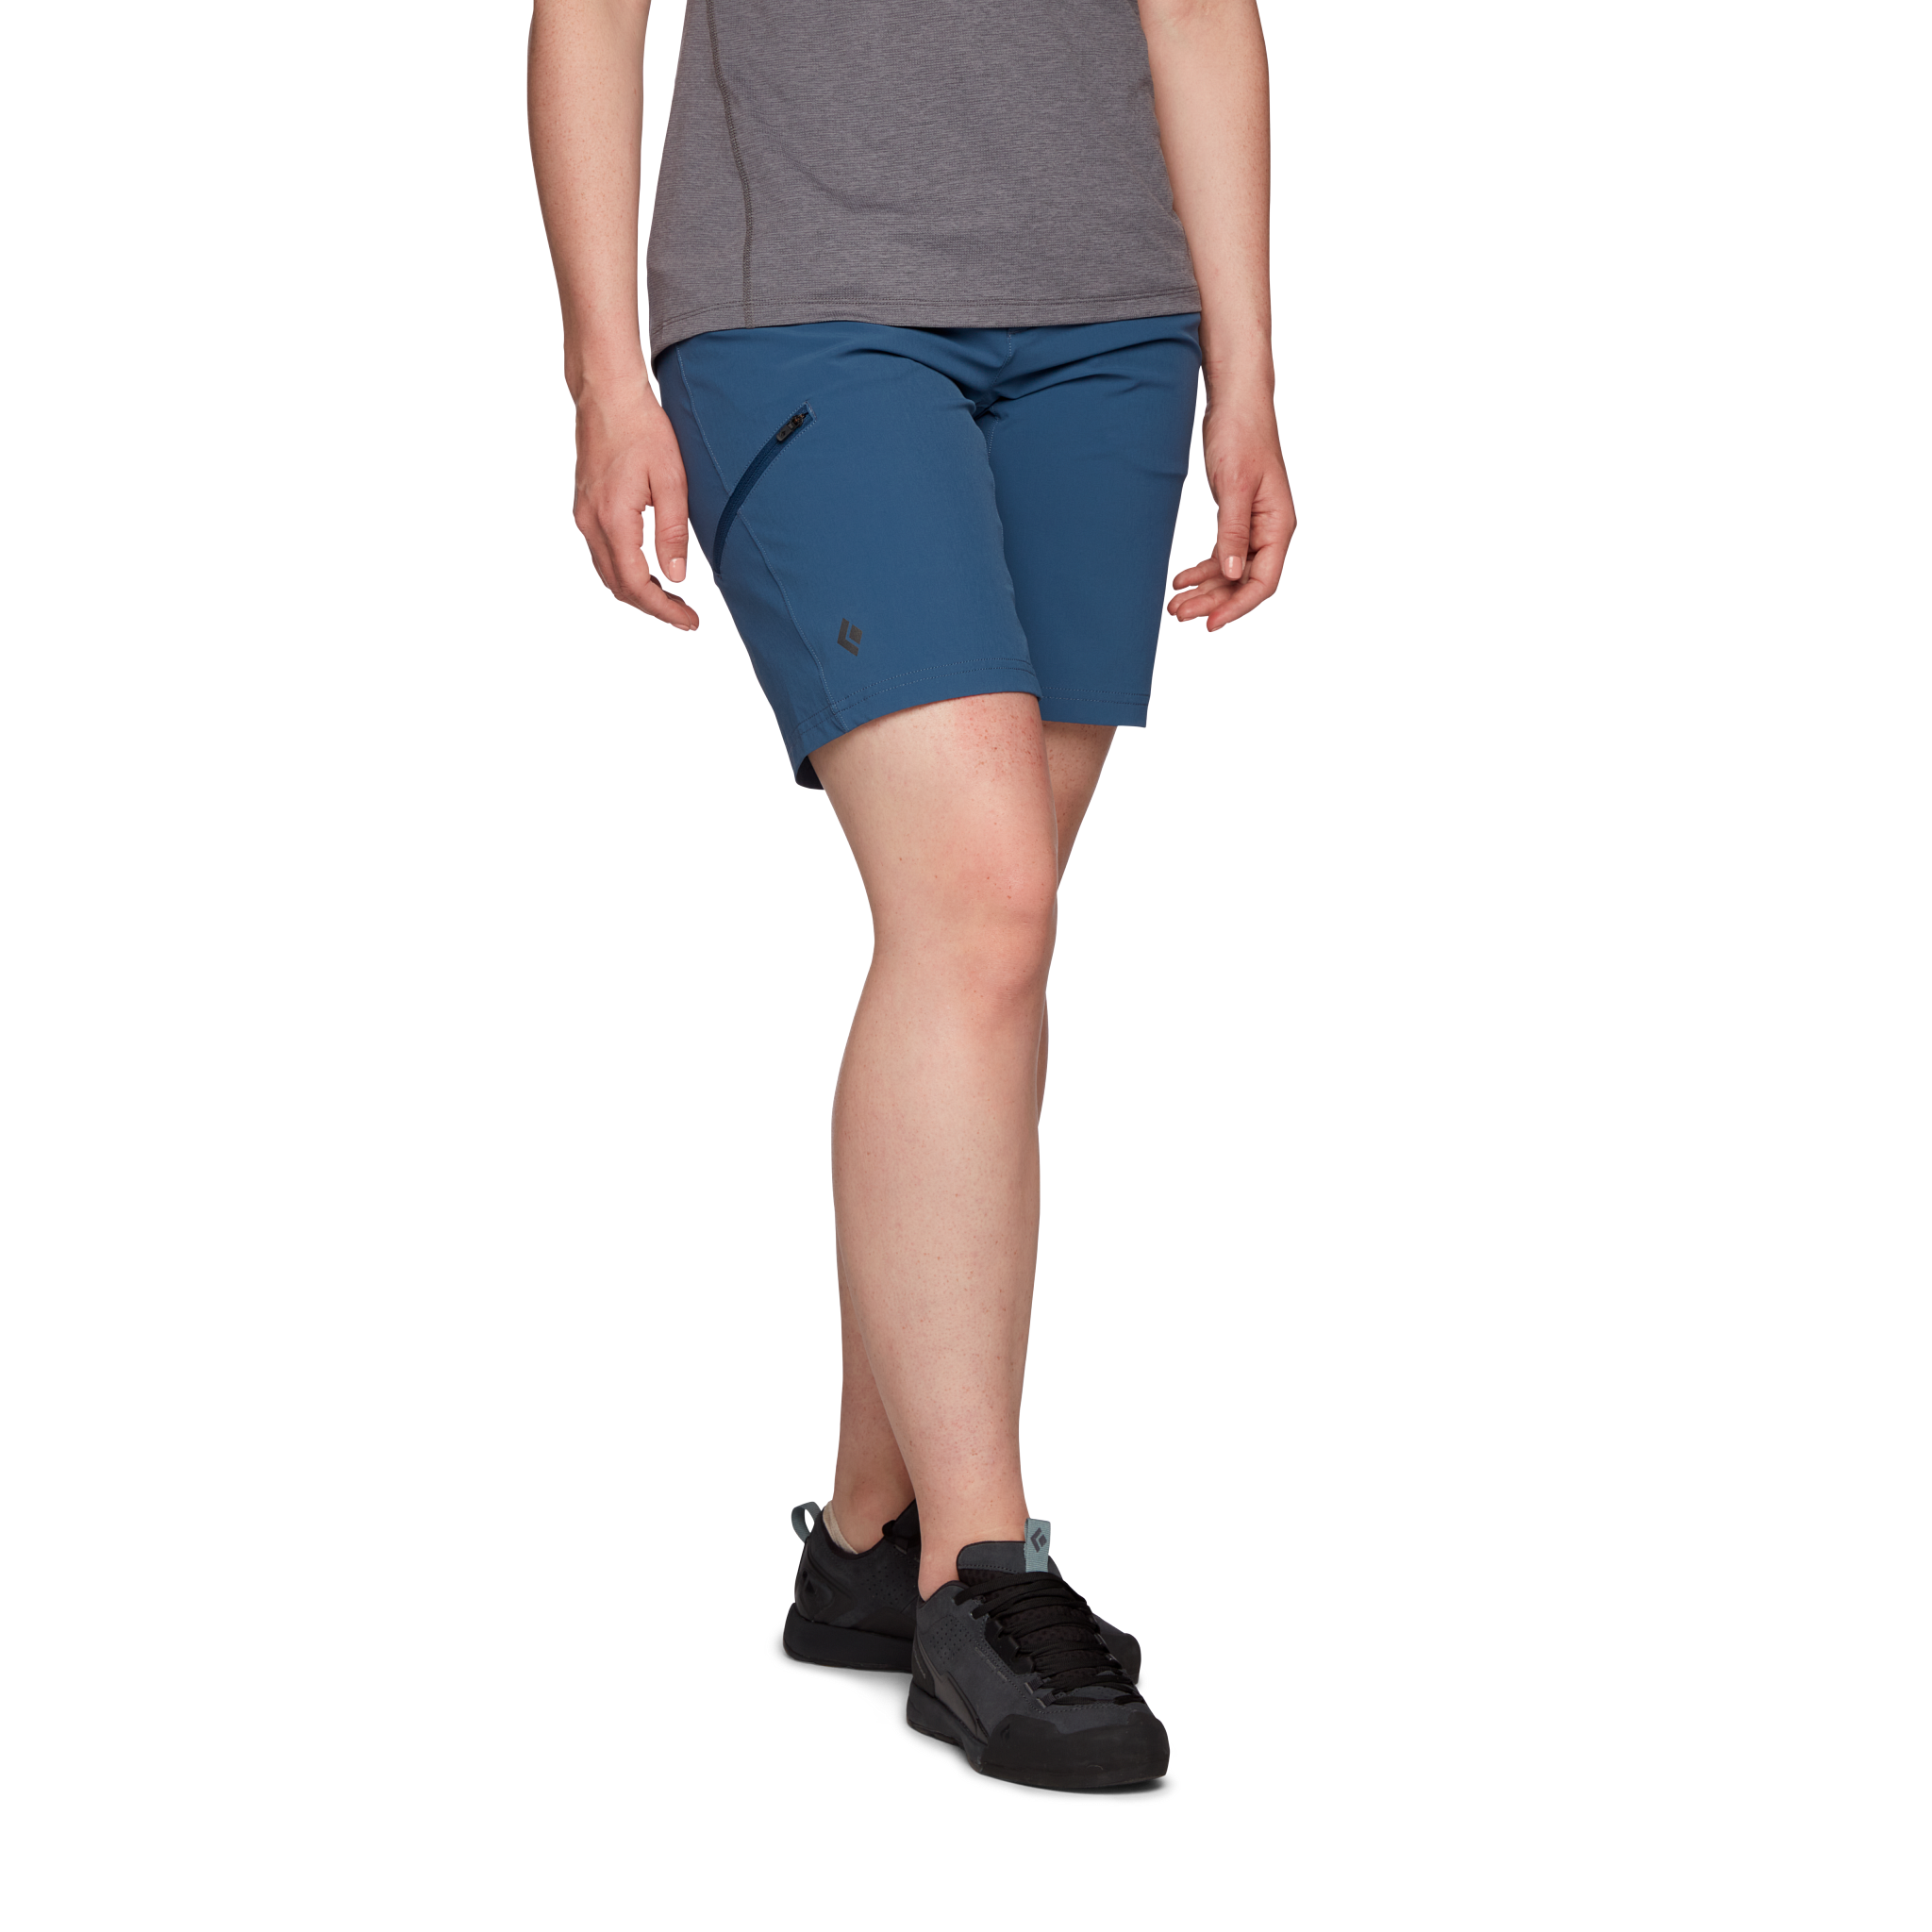 Black Diamond Equipment Women's Valley Shorts Size 4, in Ink Blue